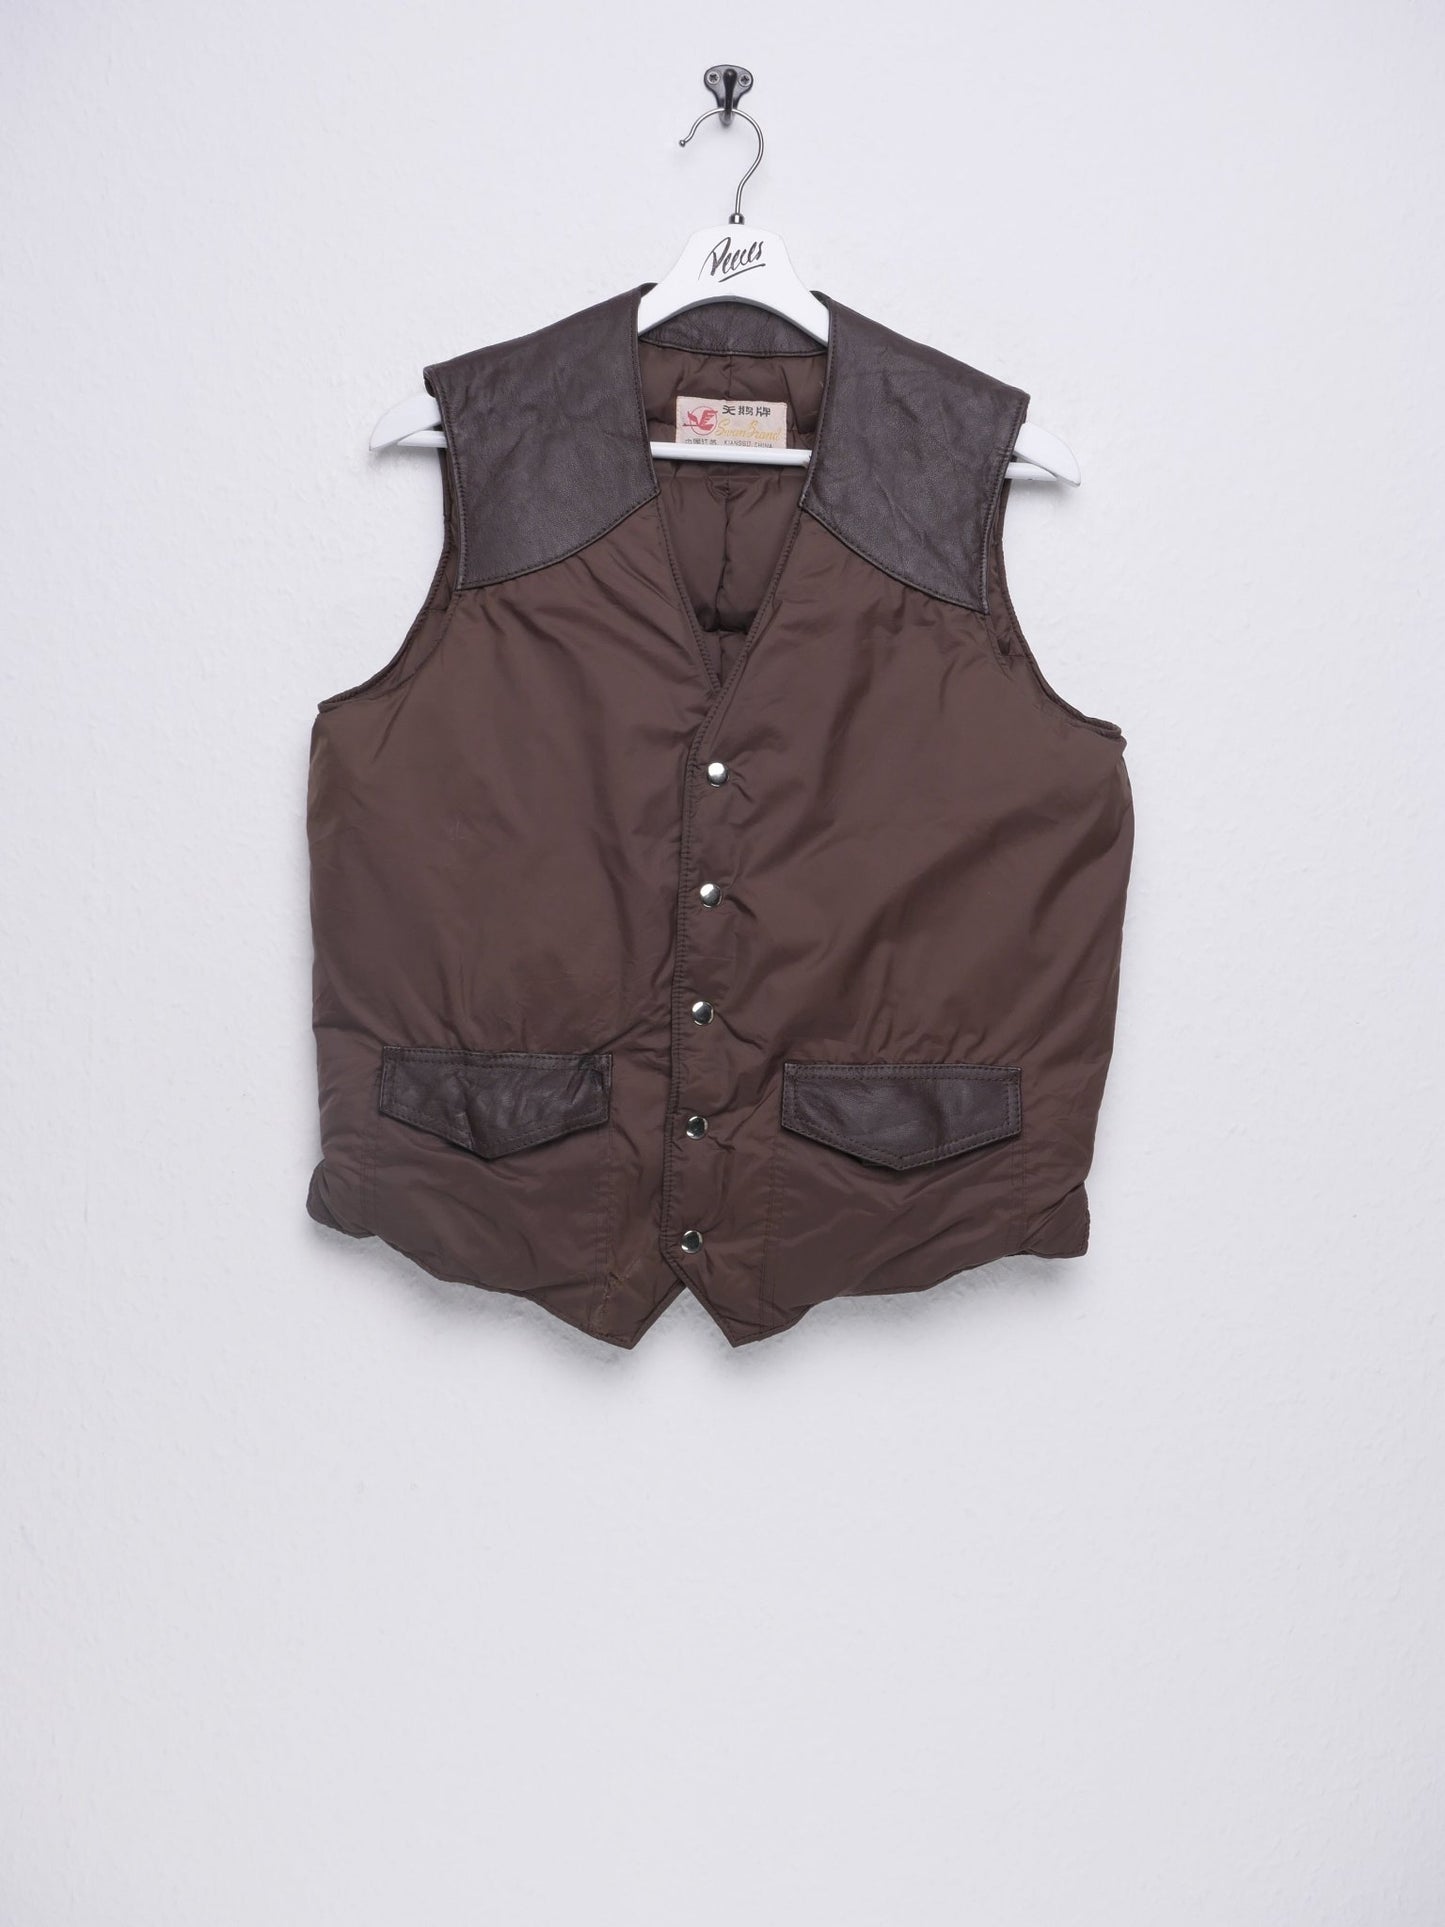 brown vest wih leather Jacke - Peeces